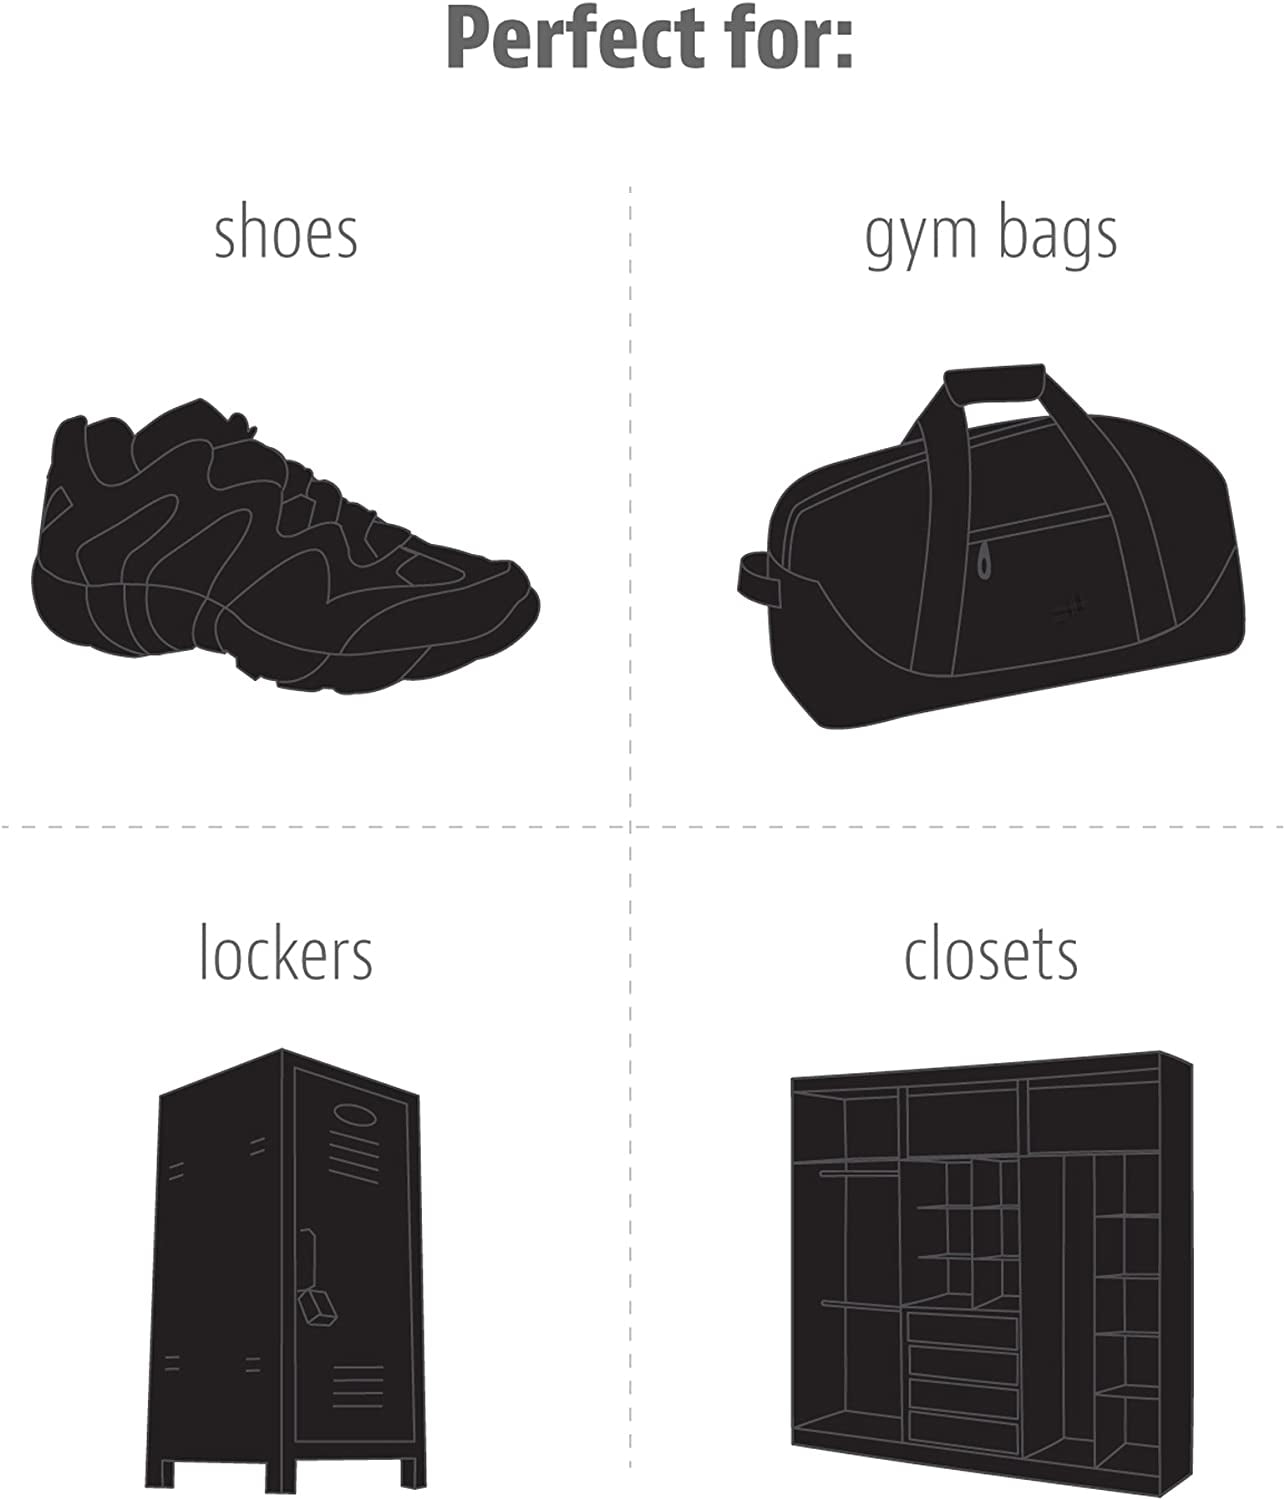 Sof Sole Sneaker Balls Shoe, Gym Bag, and Locker Deodorizer